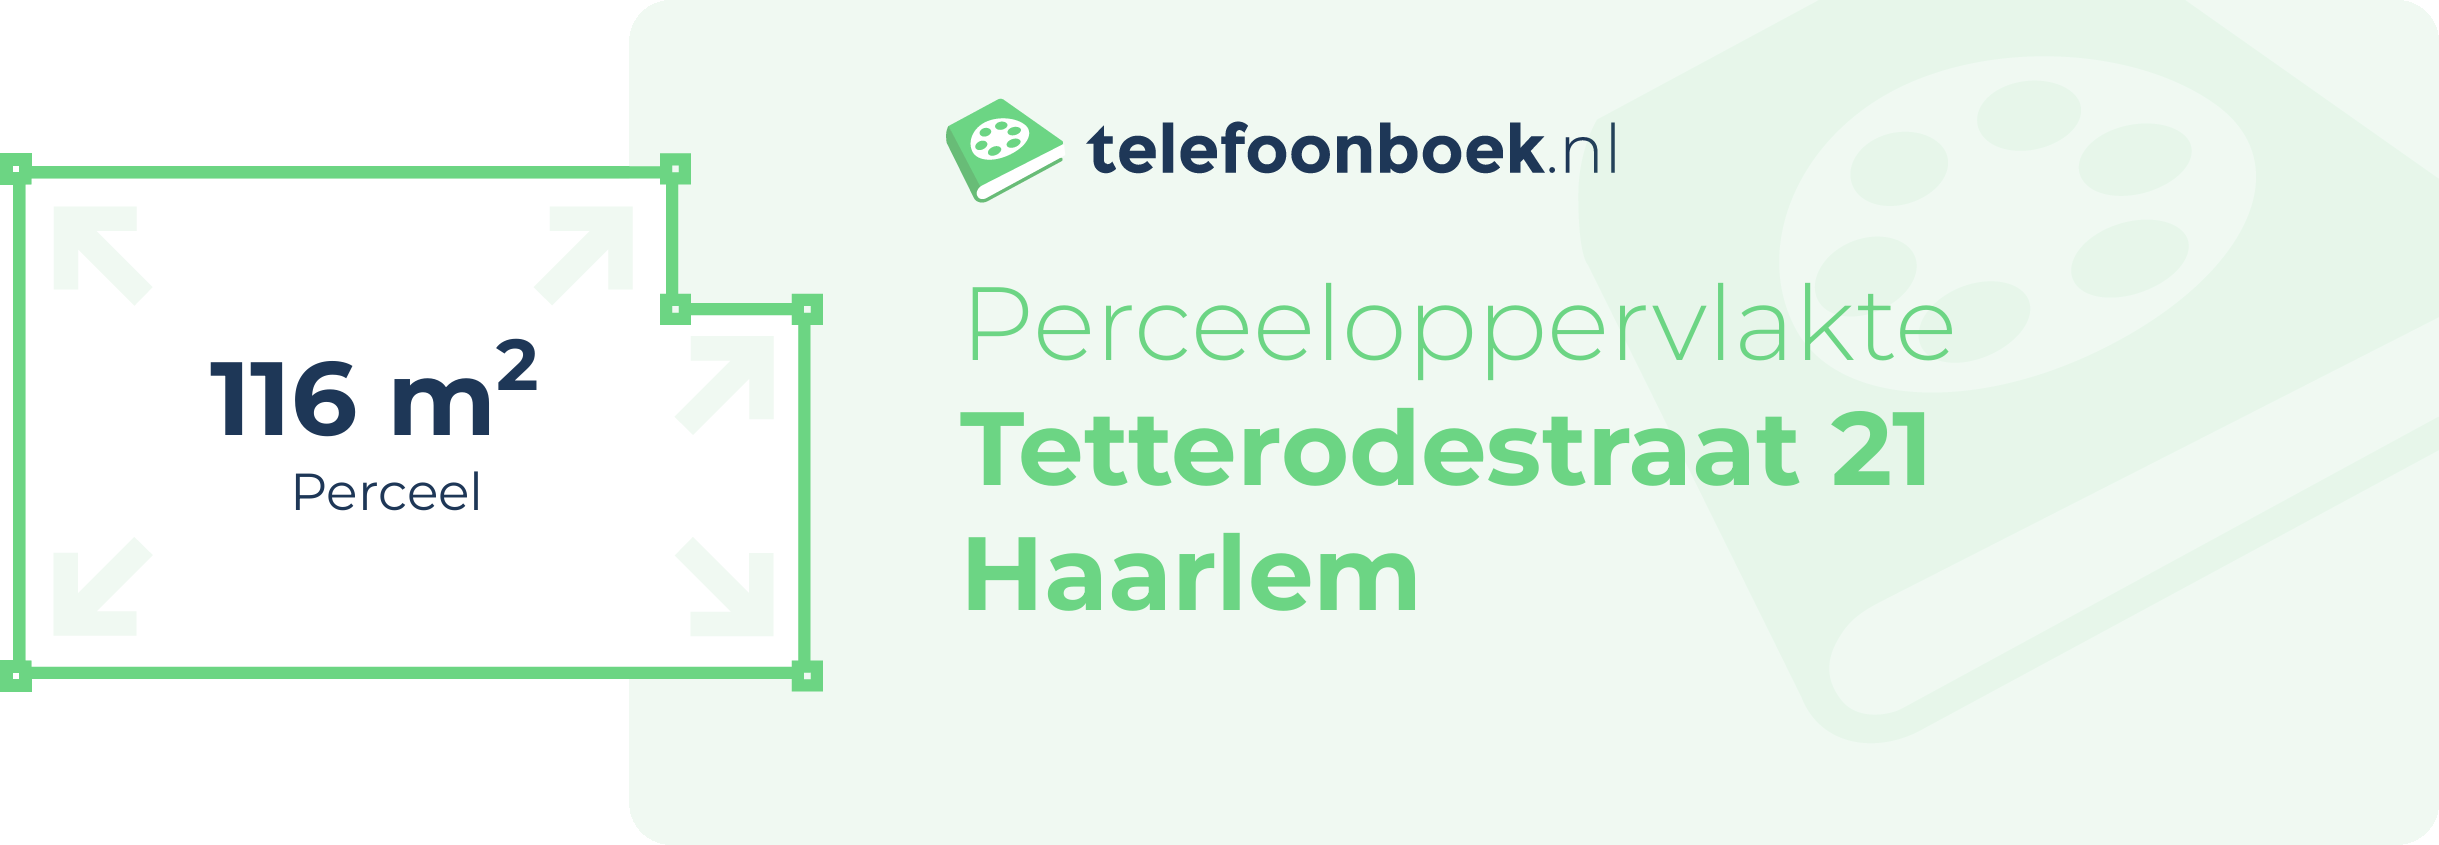 Perceeloppervlakte Tetterodestraat 21 Haarlem